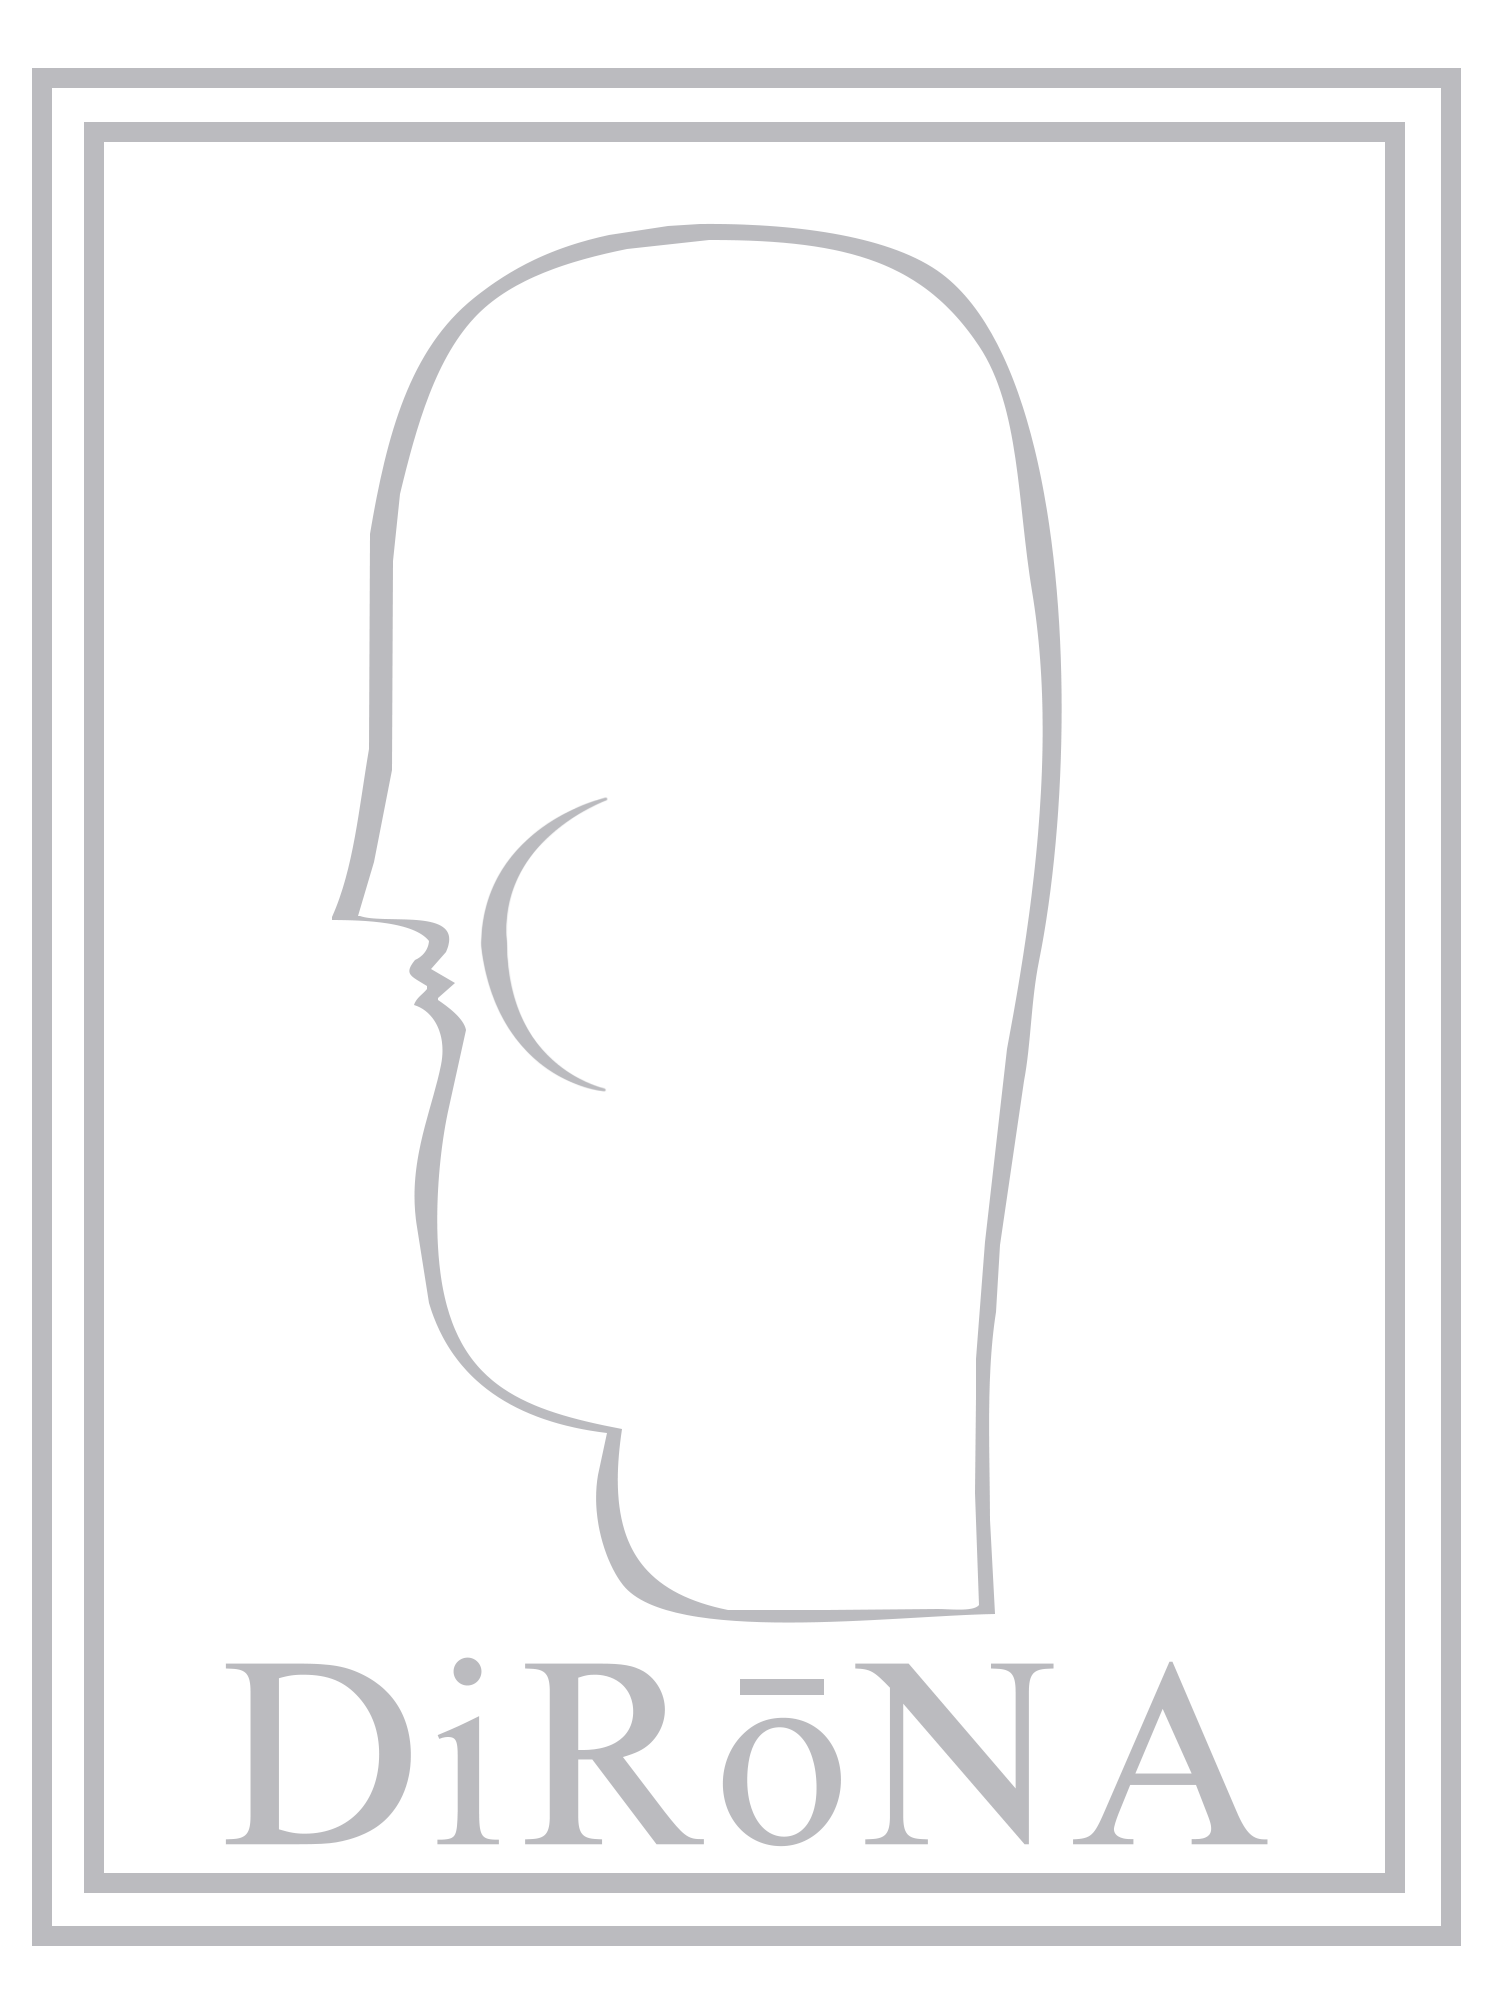 DiRoNA Awarded Restaurant Distinguished Restaurants of North America logo Grey